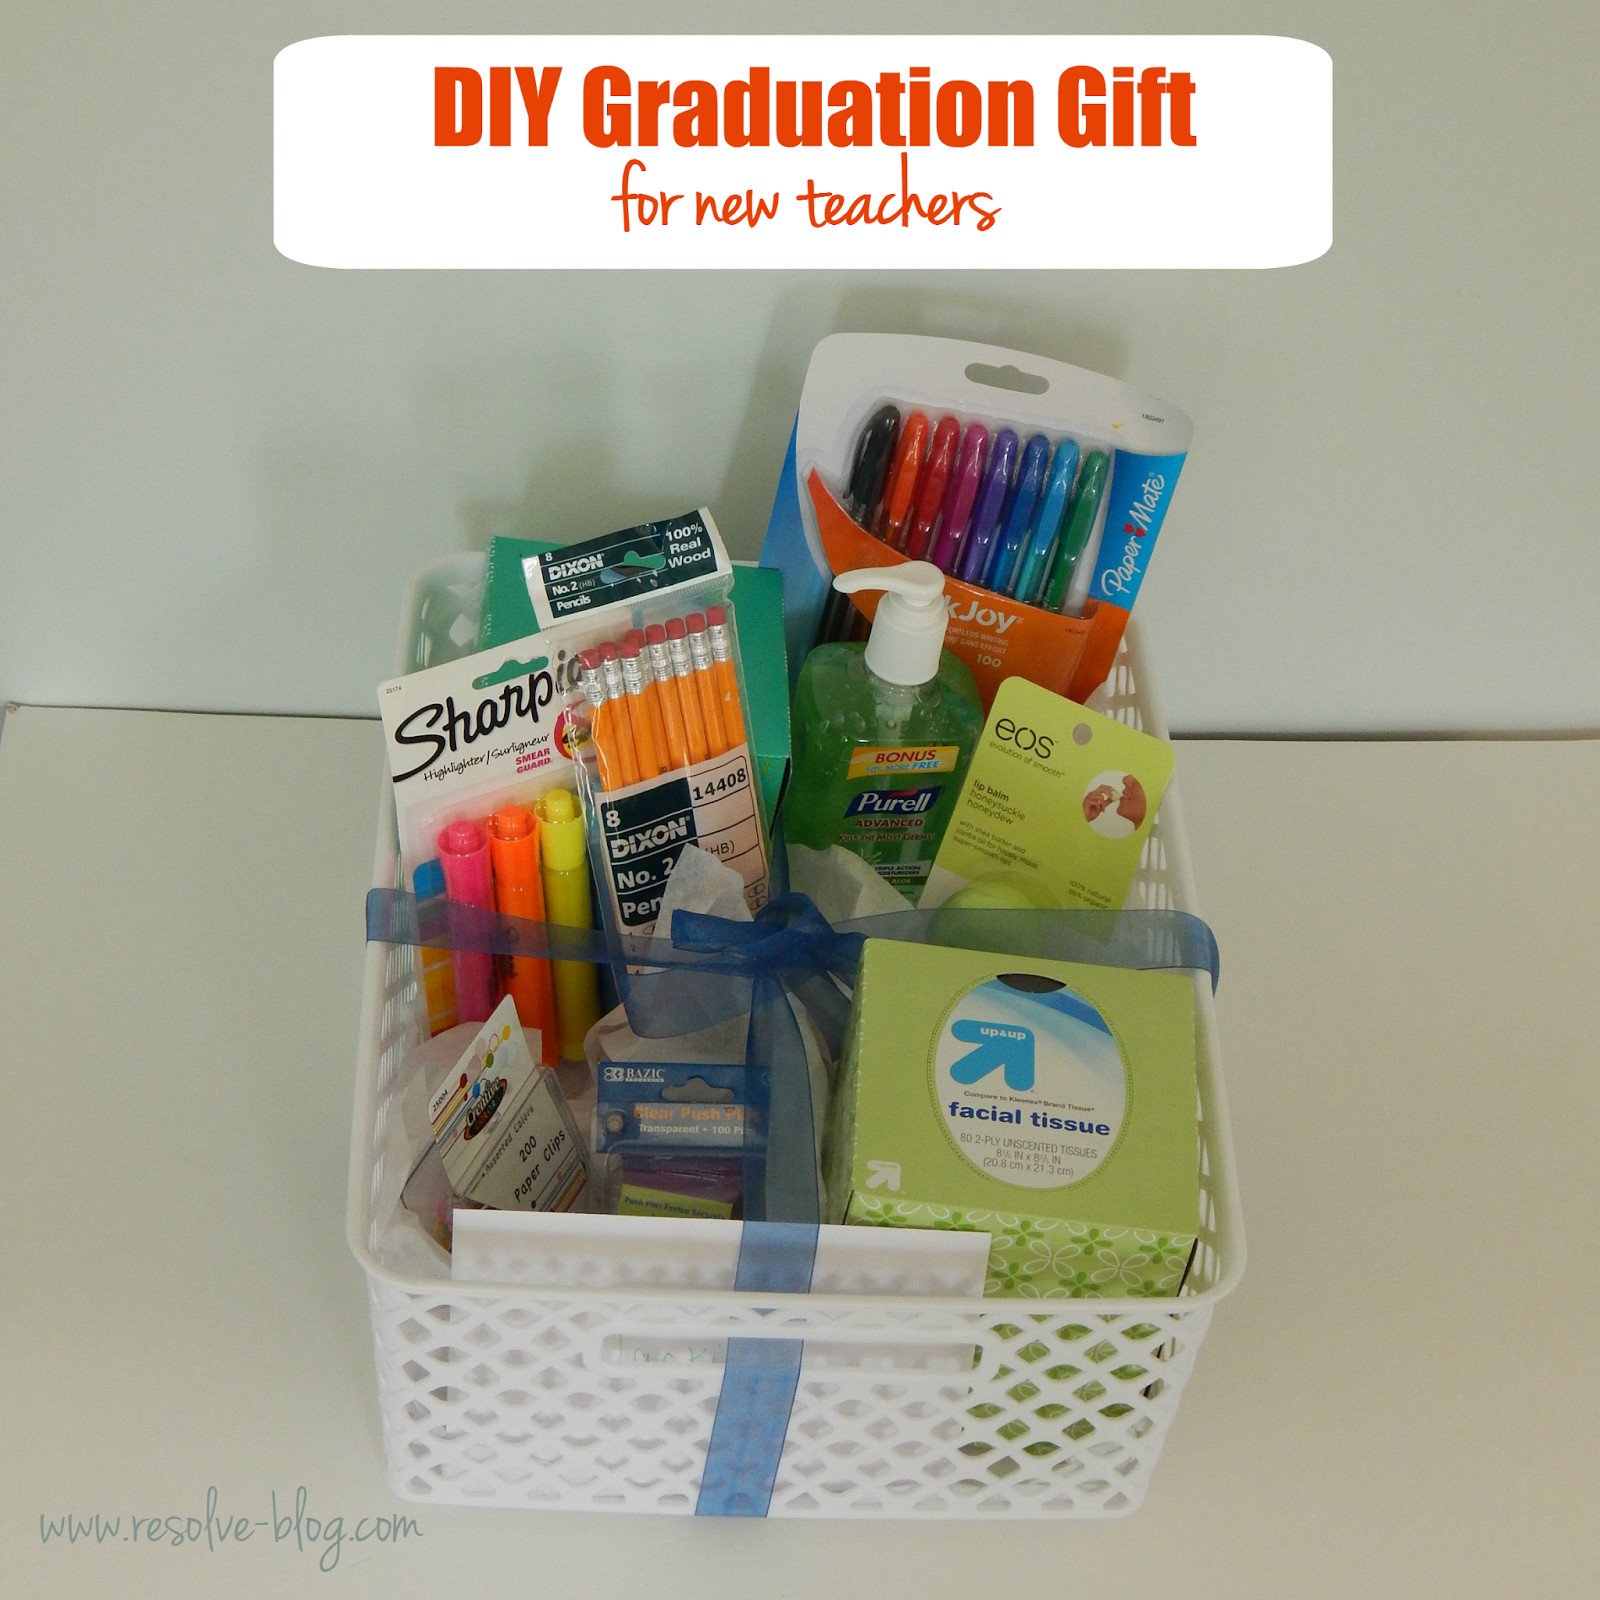 Graduation Gift Ideas For Teachers
 DIY Graduation Gift for New Teachers